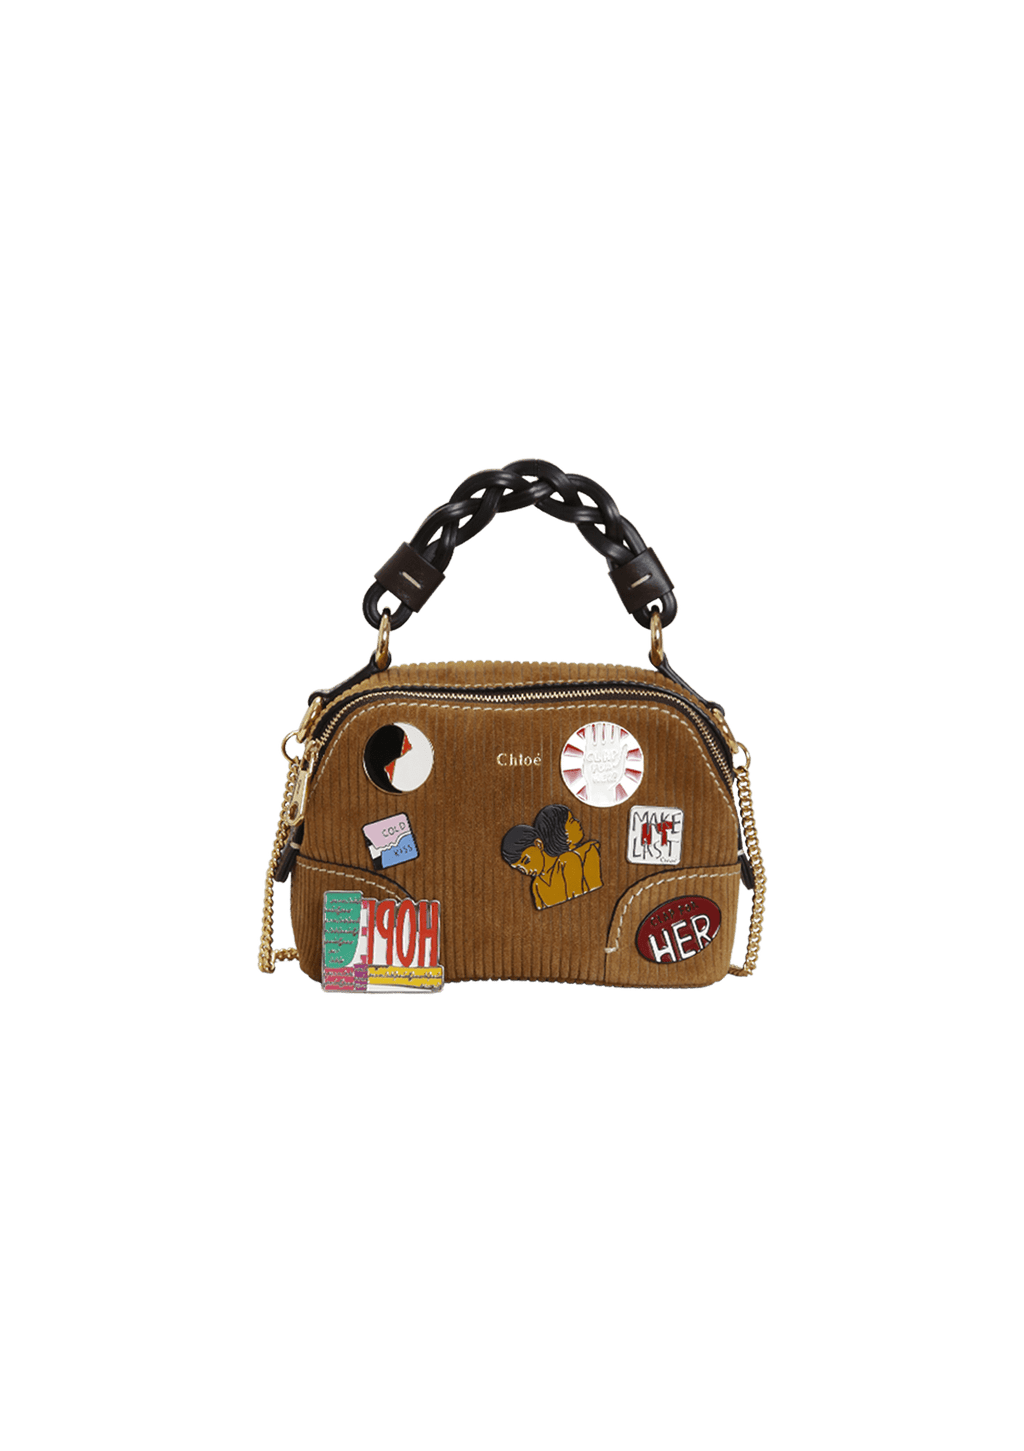 Pin by eliane Coutinho on bolsas  Louis vuitton luggage, Fashion bags, Bags